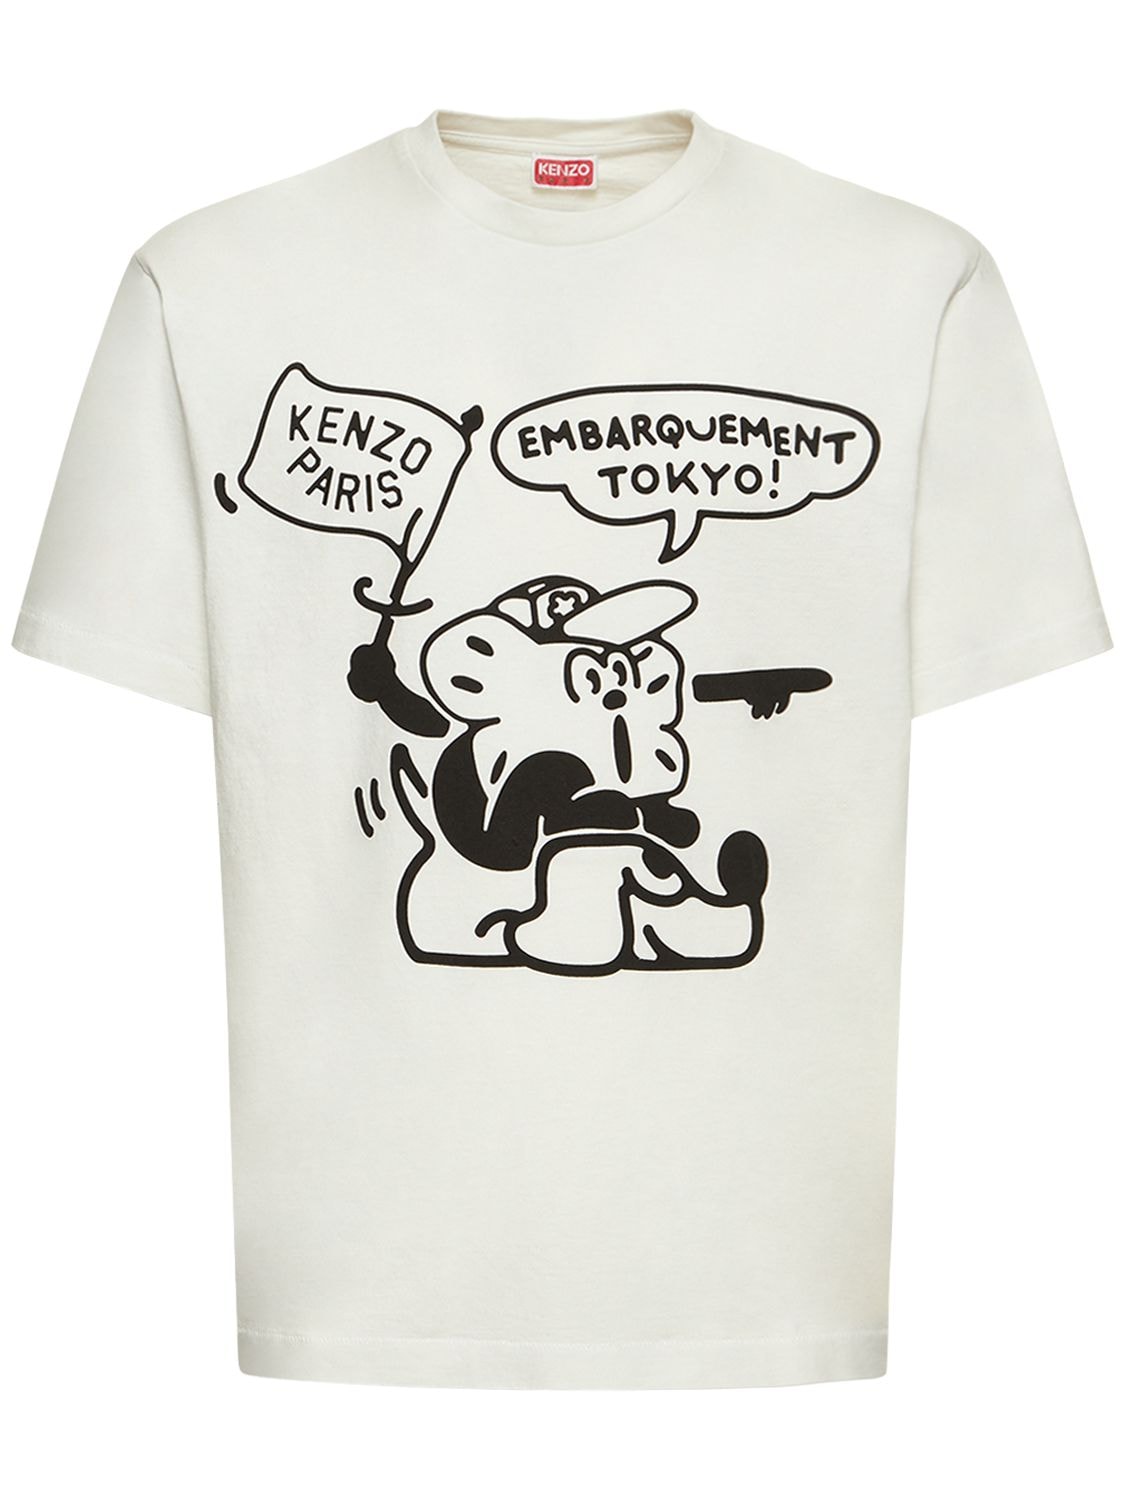 T-shirt En Jersey Imprimé Boke Boy - KENZO PARIS - Modalova